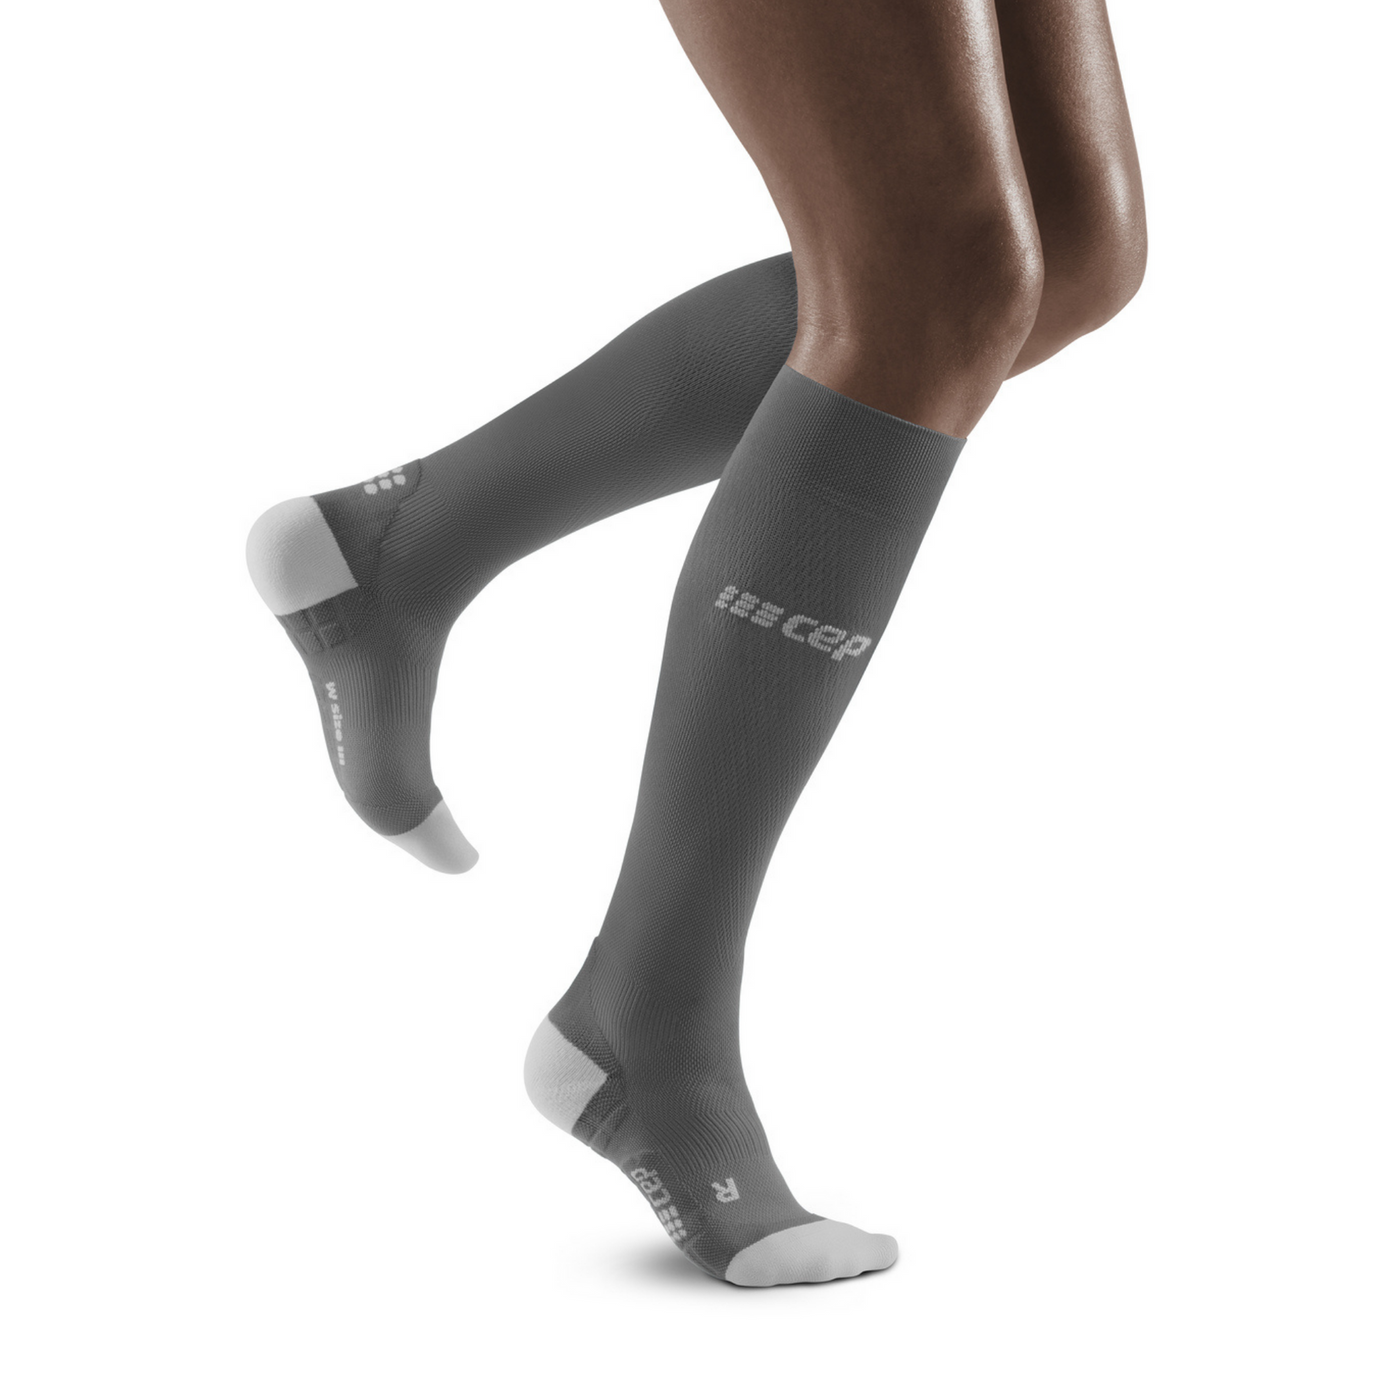 CEP Ultralight Tall Compression Women's Cycling Socks (Grey/Light Grey)